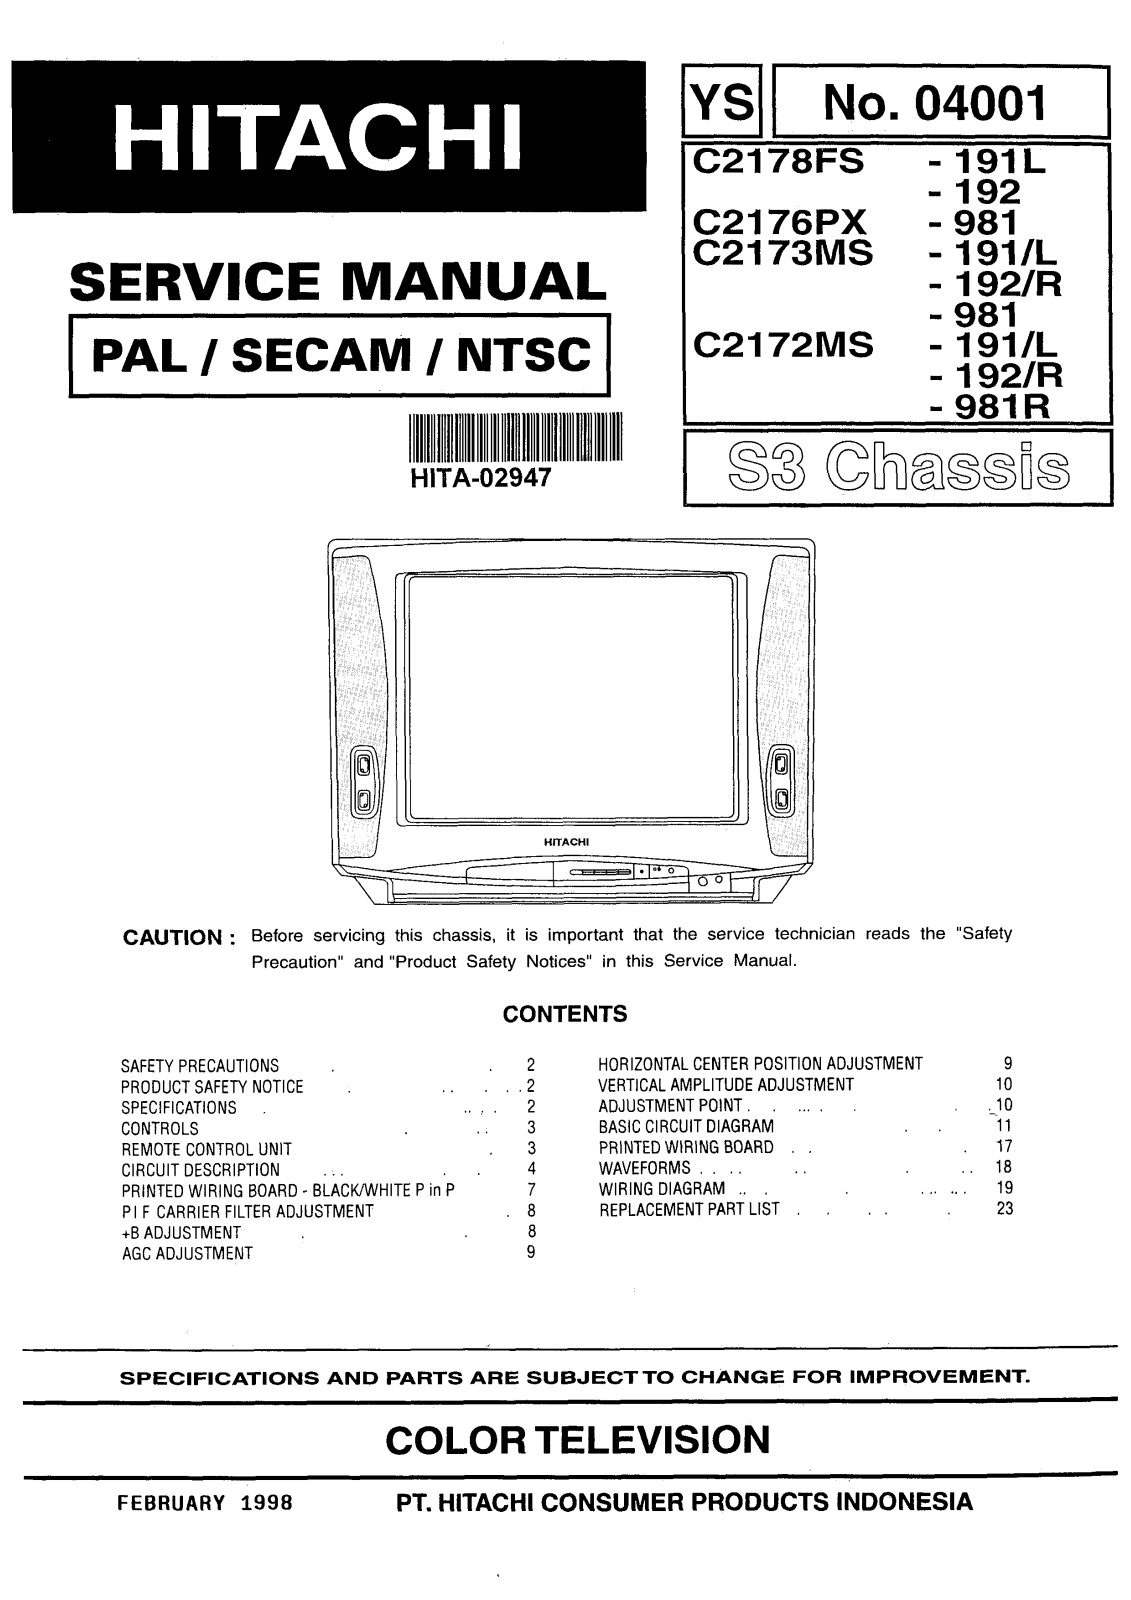 Hitachi C2176PX, C2173MS, C2172MS Service Manual